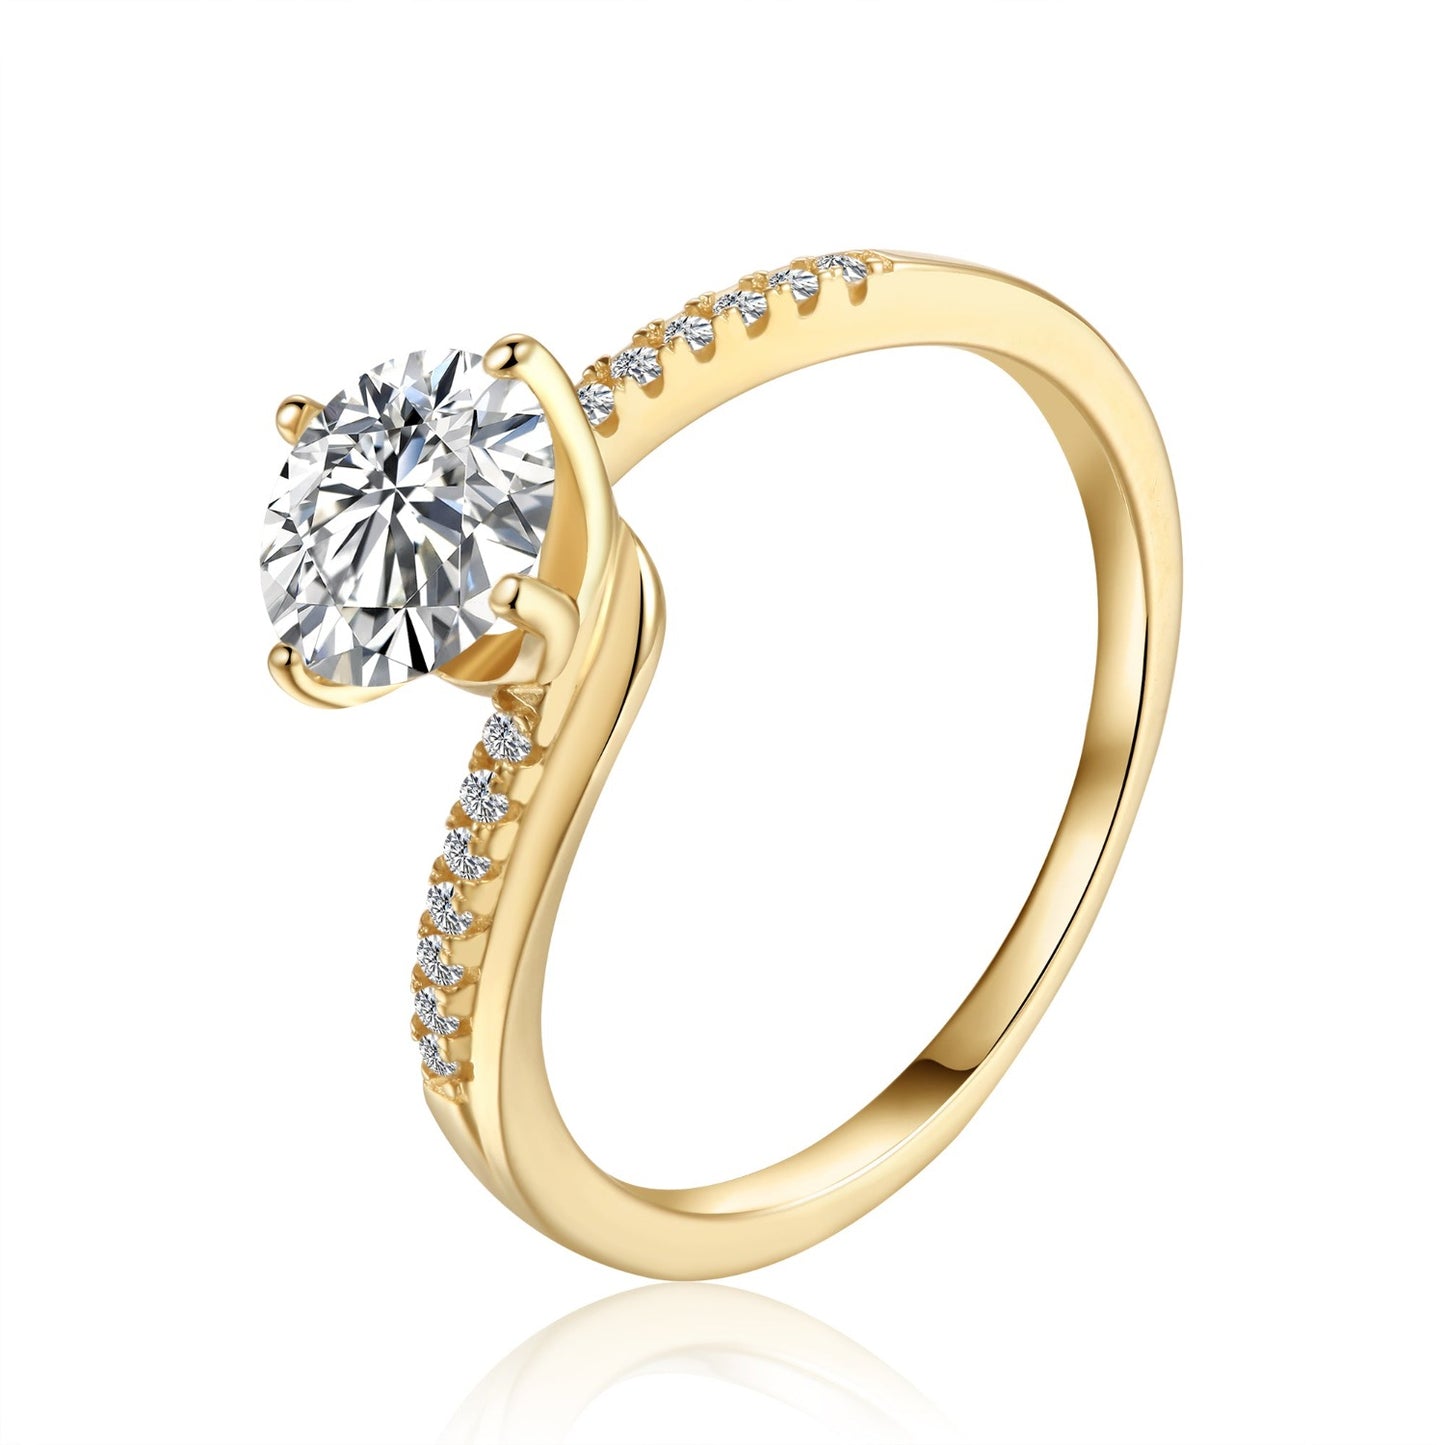 Elegant 1.00ct Moissanite Engagement Ring Set in 9ct Yellow Gold